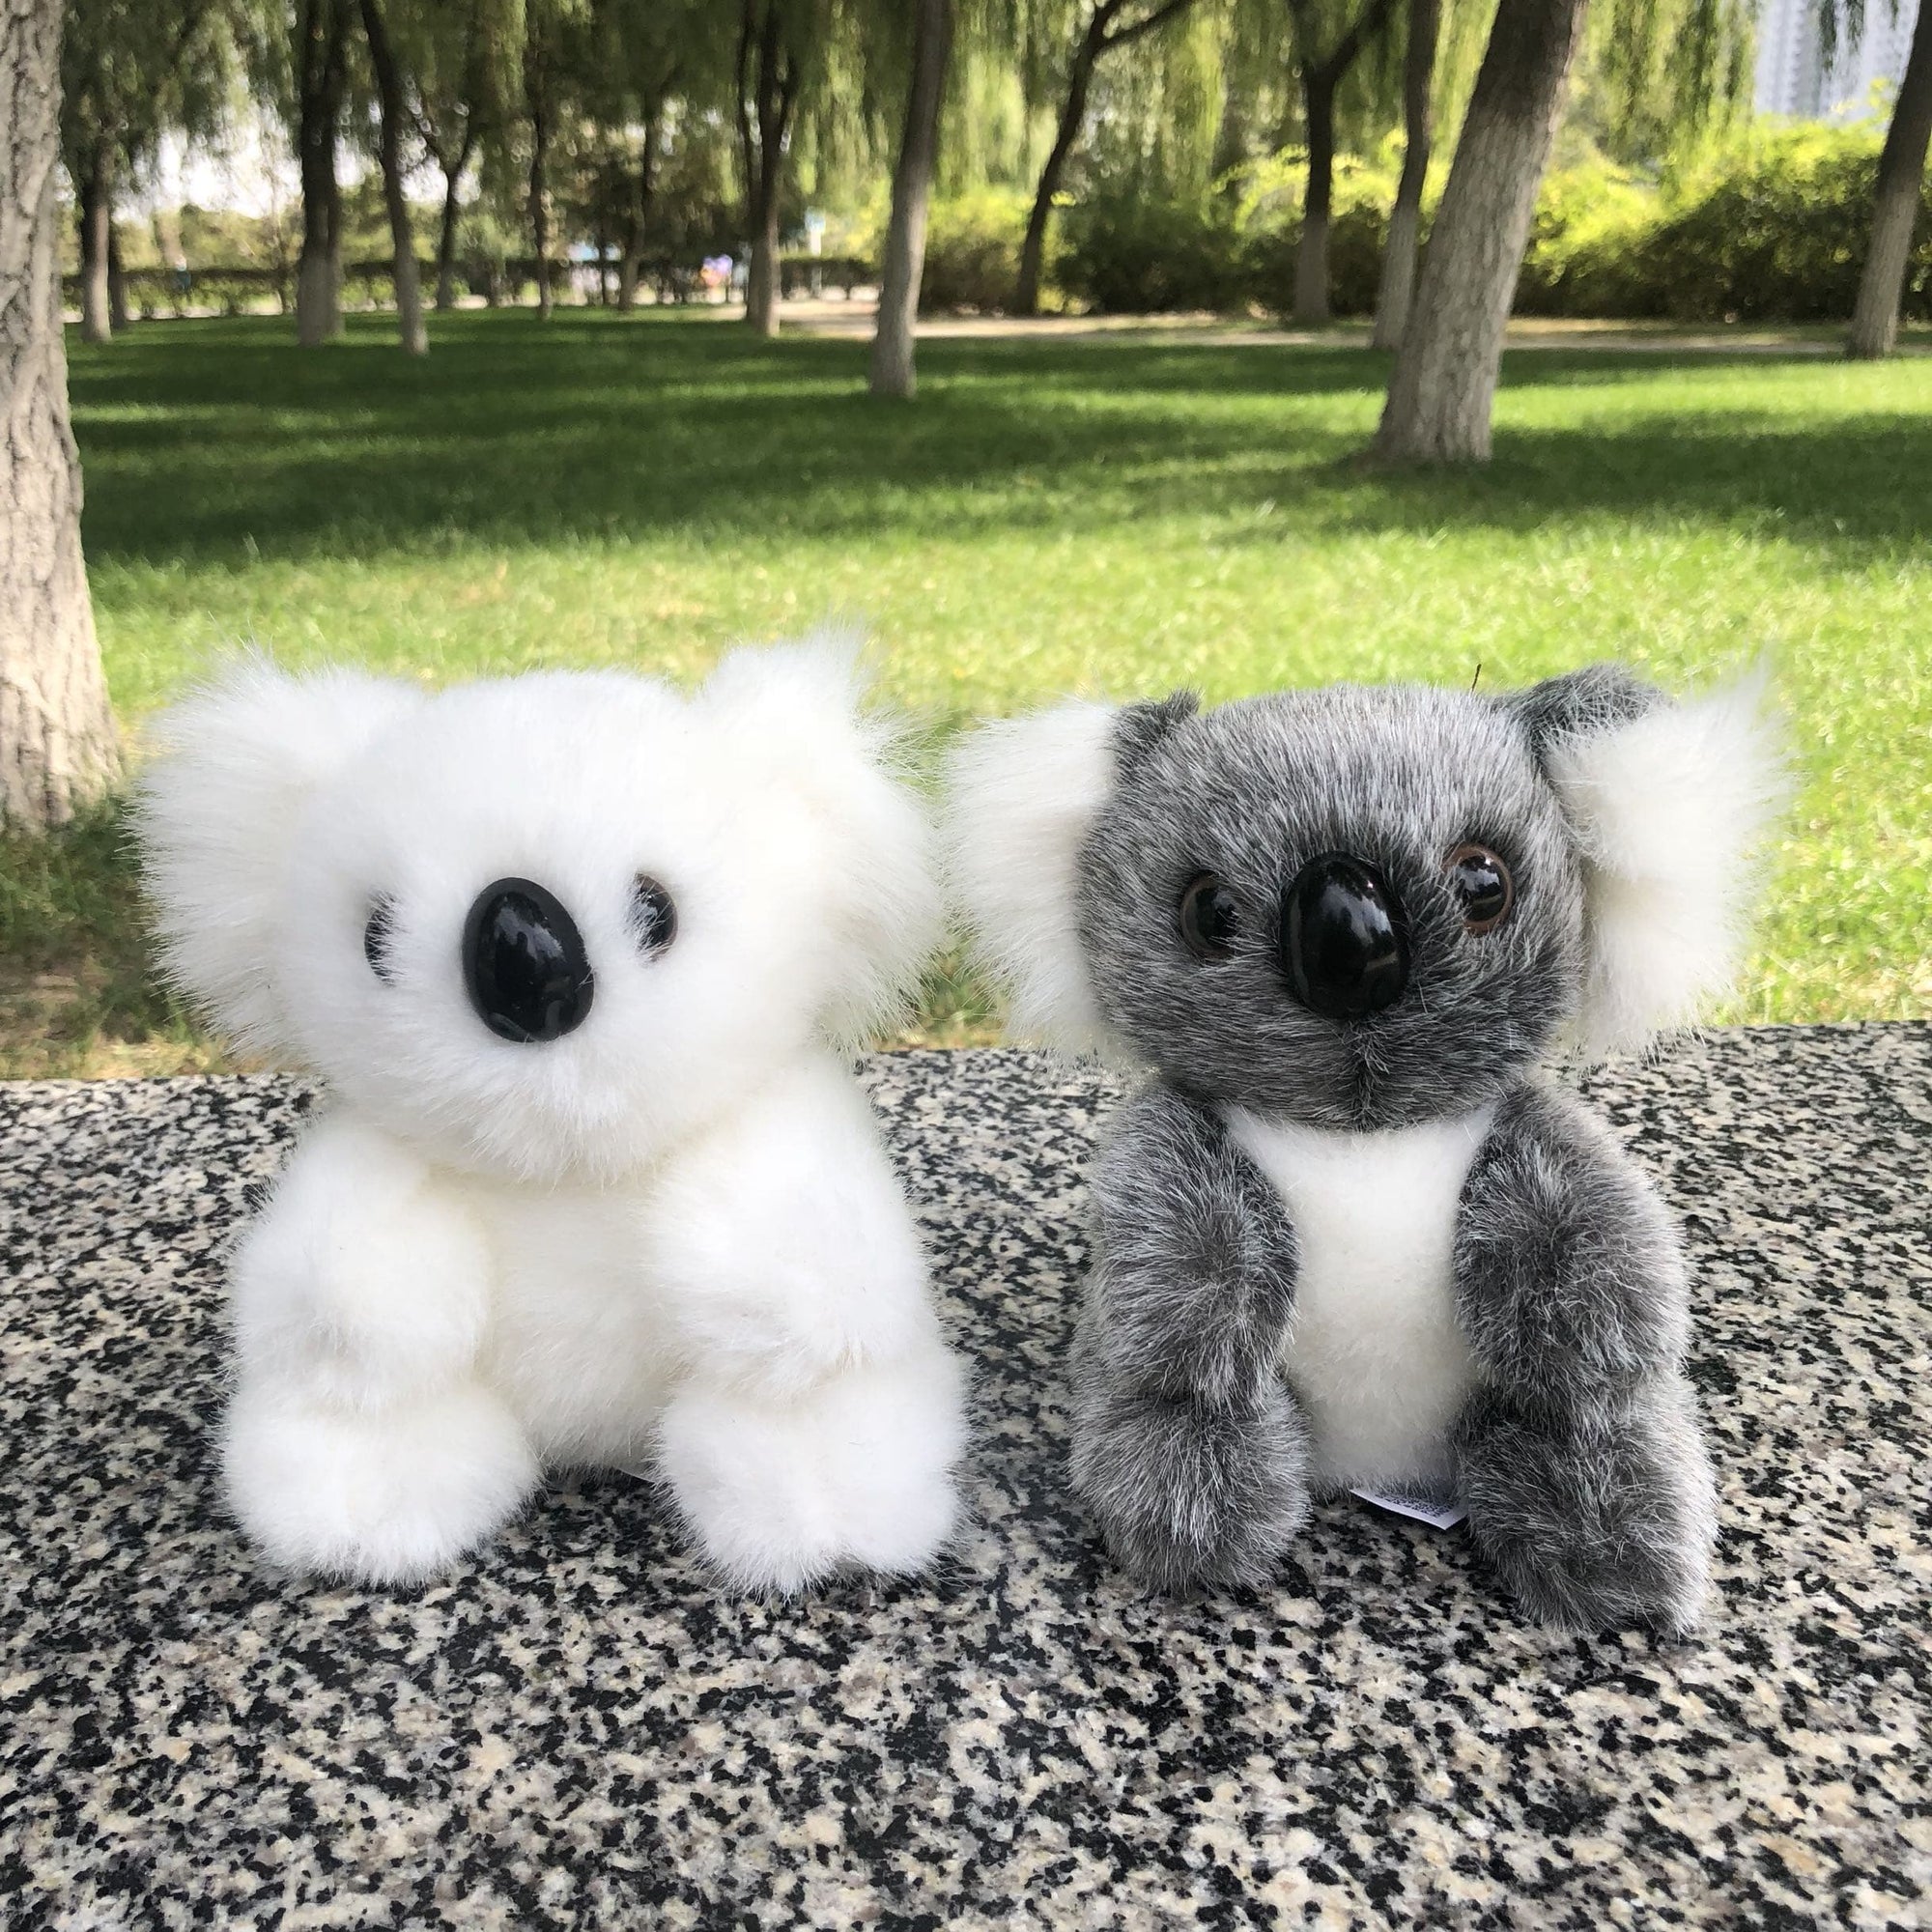 Small Koala Plush